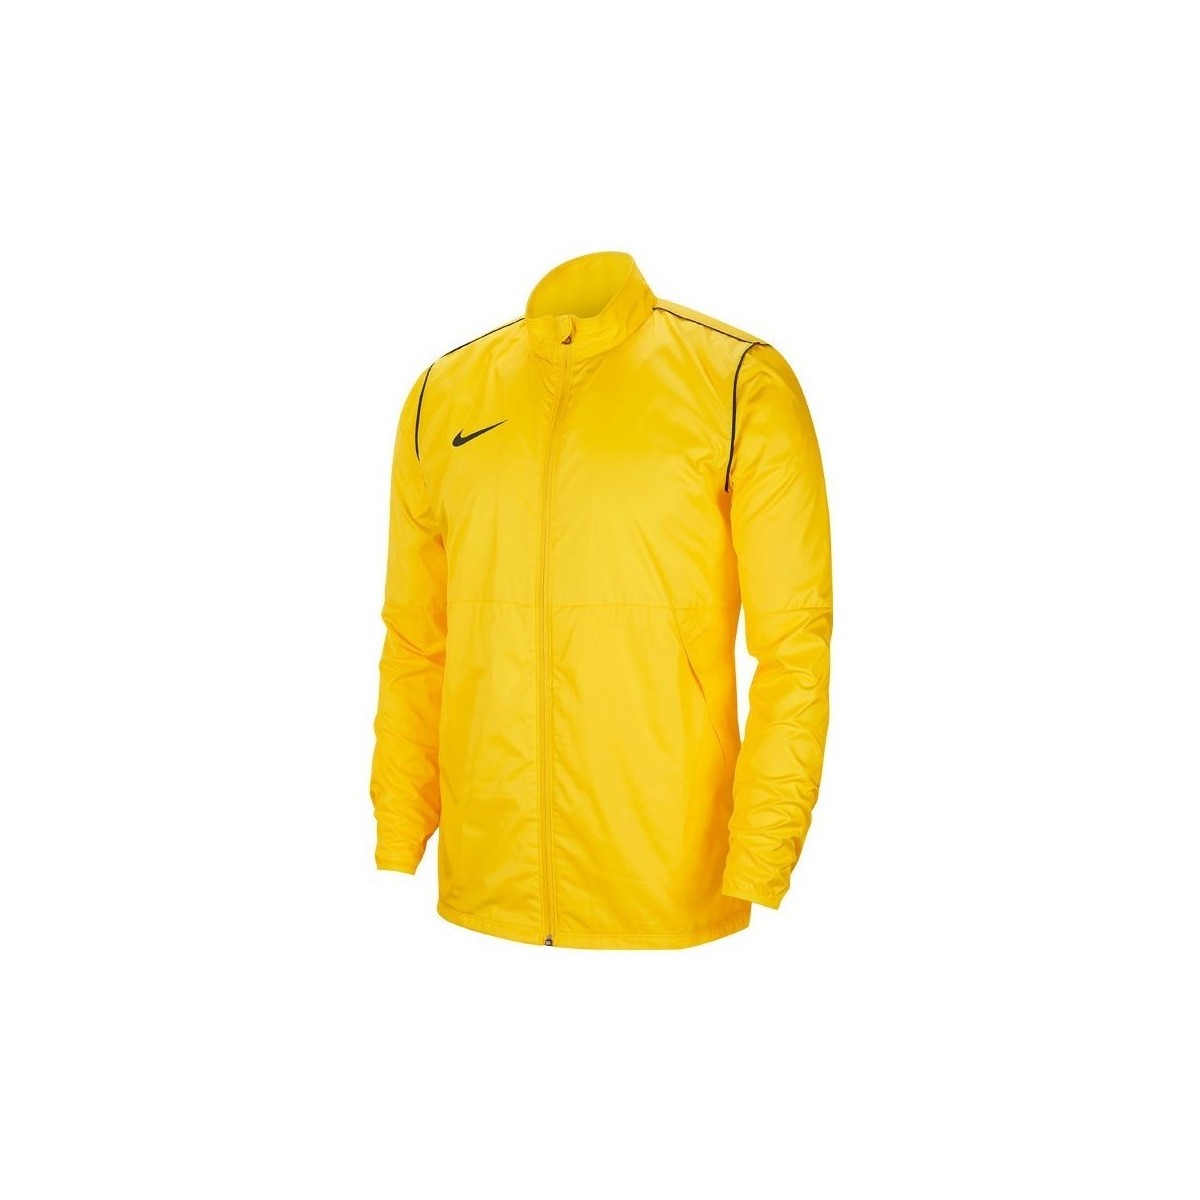 Textil Muži Bundy Nike Park 20 Repel Žlutá